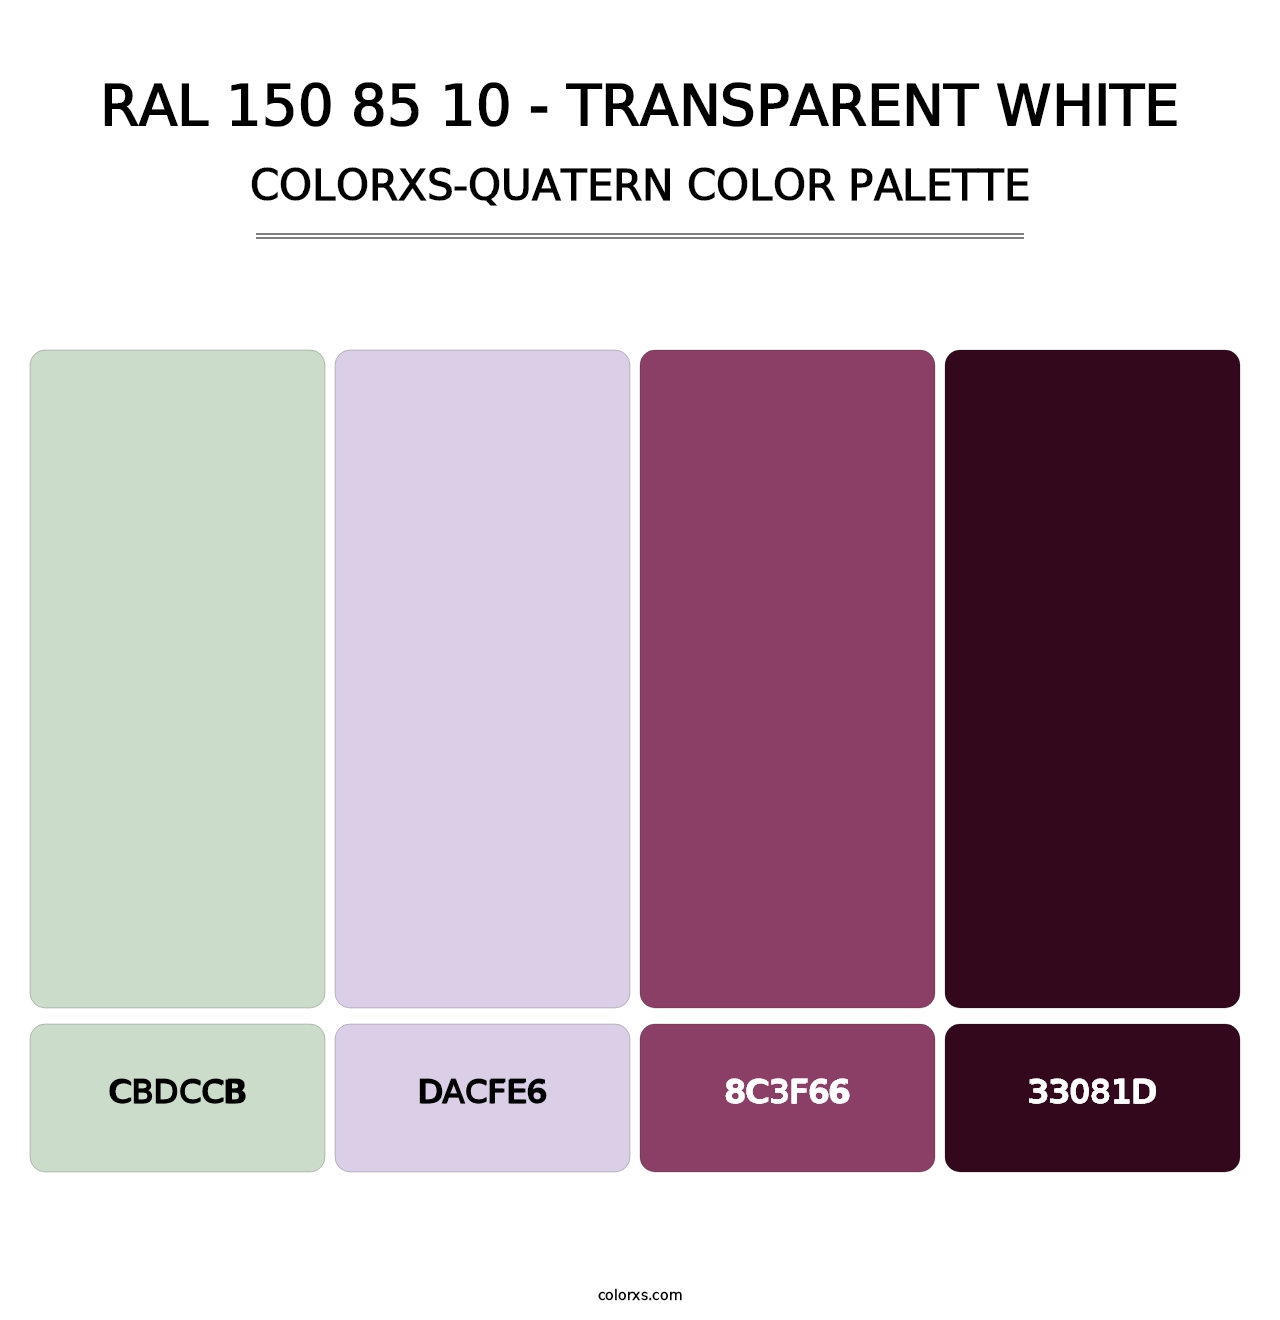 RAL 150 85 10 - Transparent White - Colorxs Quatern Palette